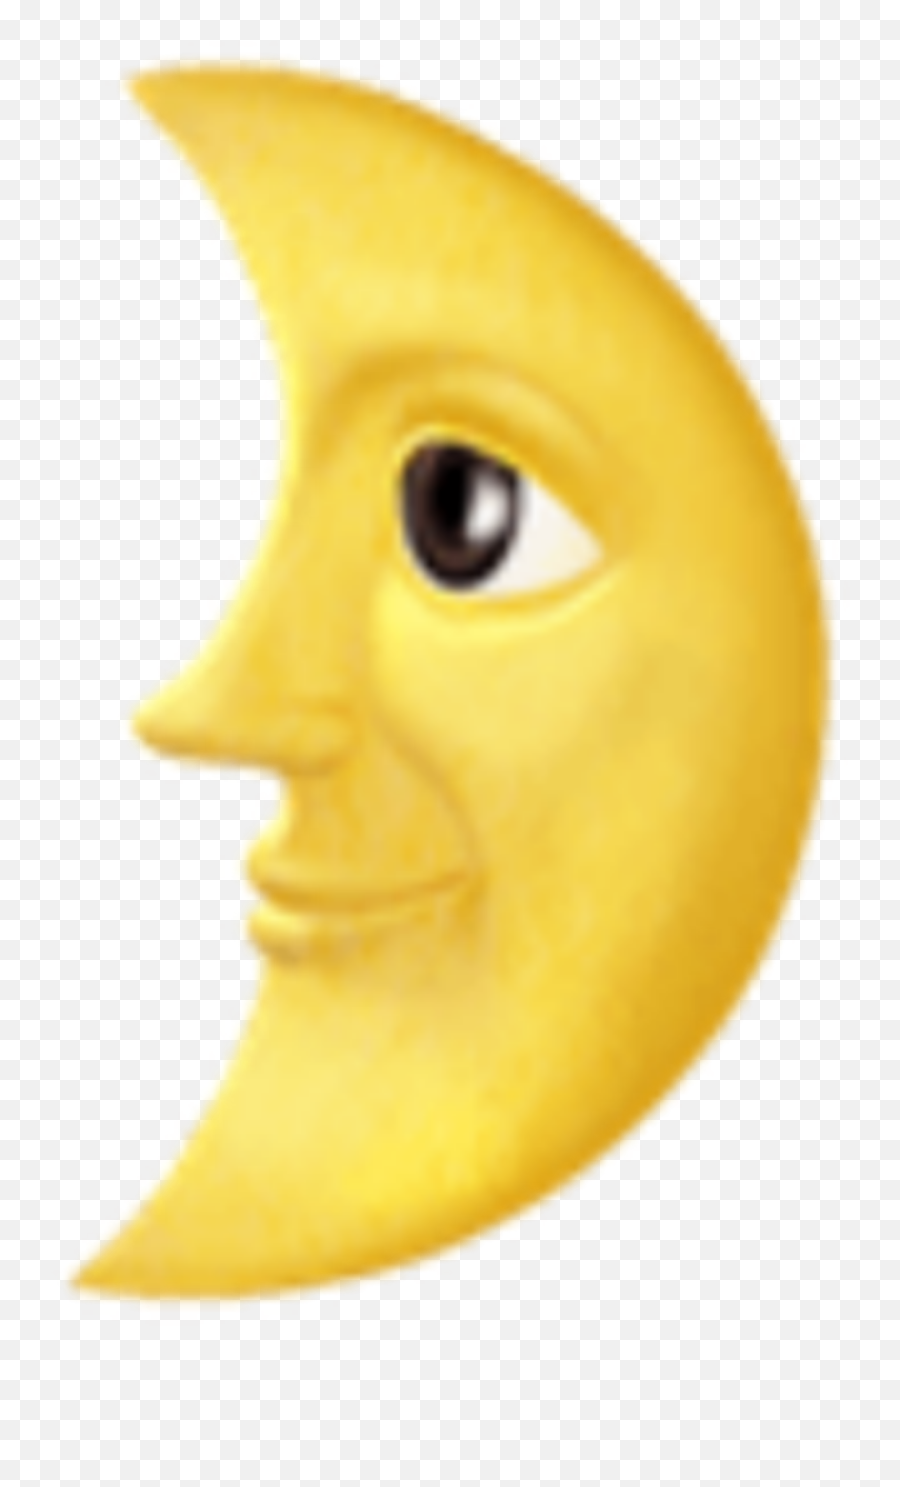 Iphoneemoji Emojiiphone Emoji Moon Image By Manuk,Waxing Moon Emoji